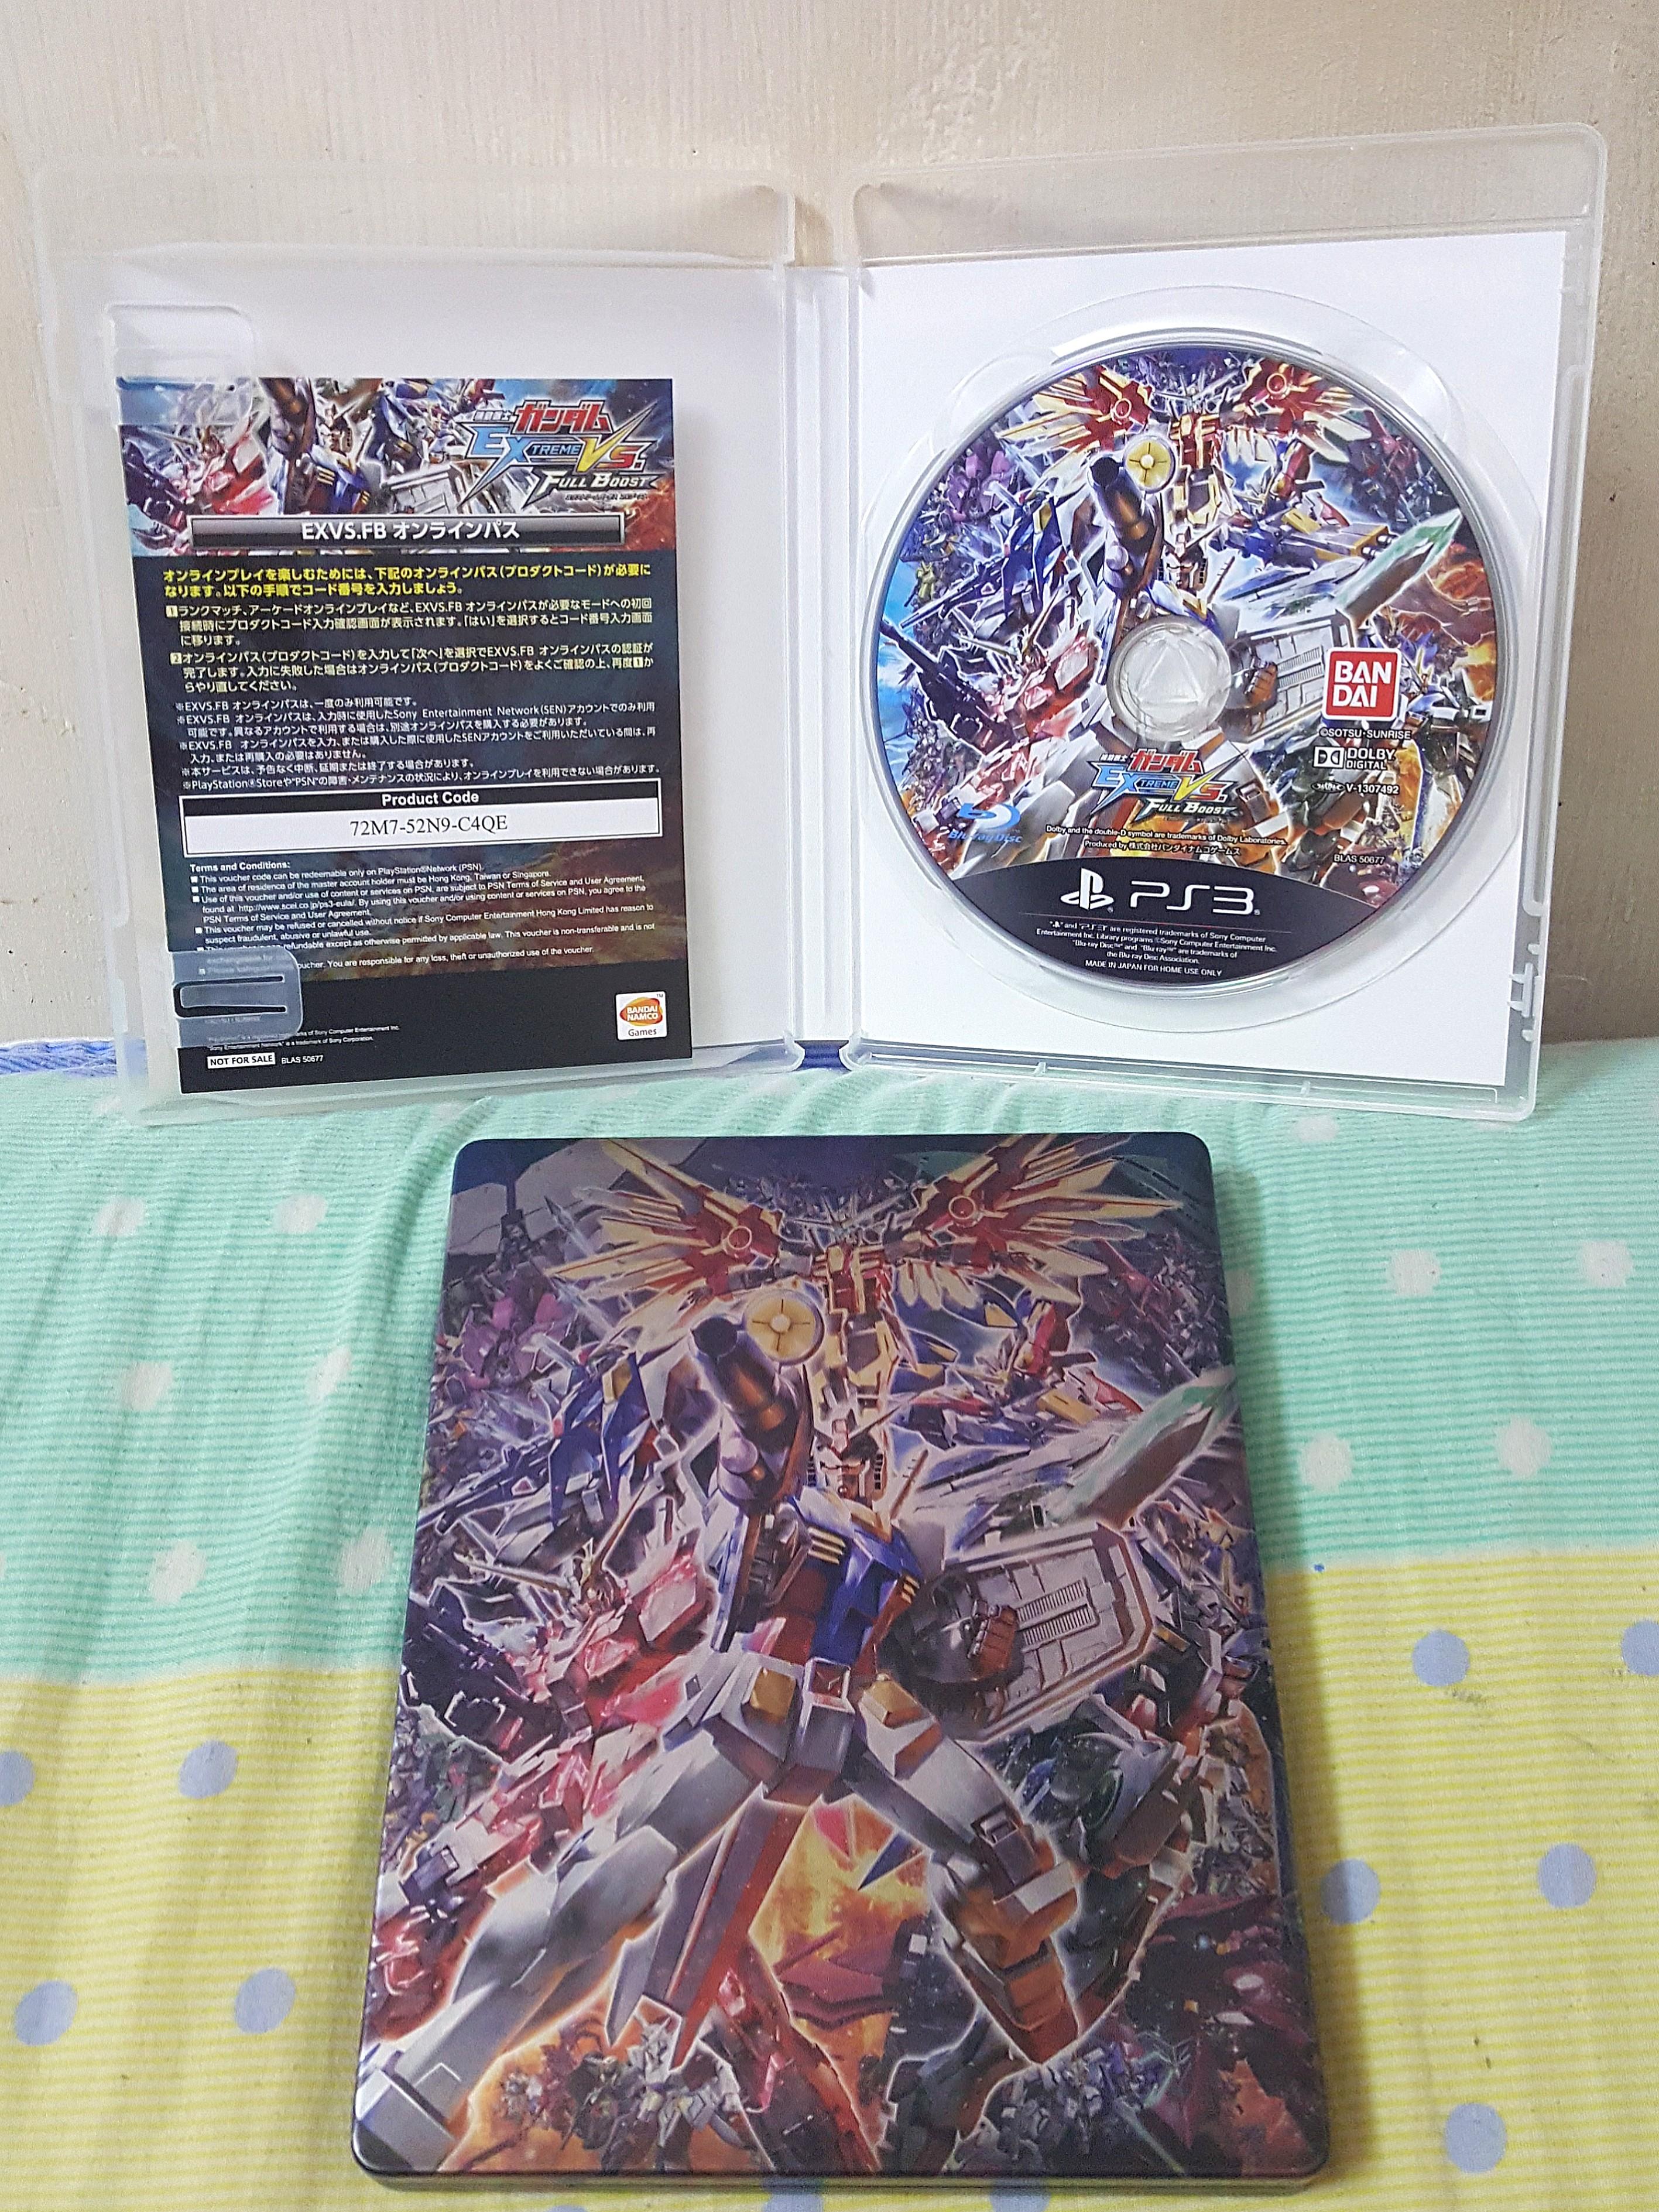 Ps3 Game Gundam Extreme Vs Full Boost Metal Box Works 遊戲機 遊戲機遊戲 Carousell